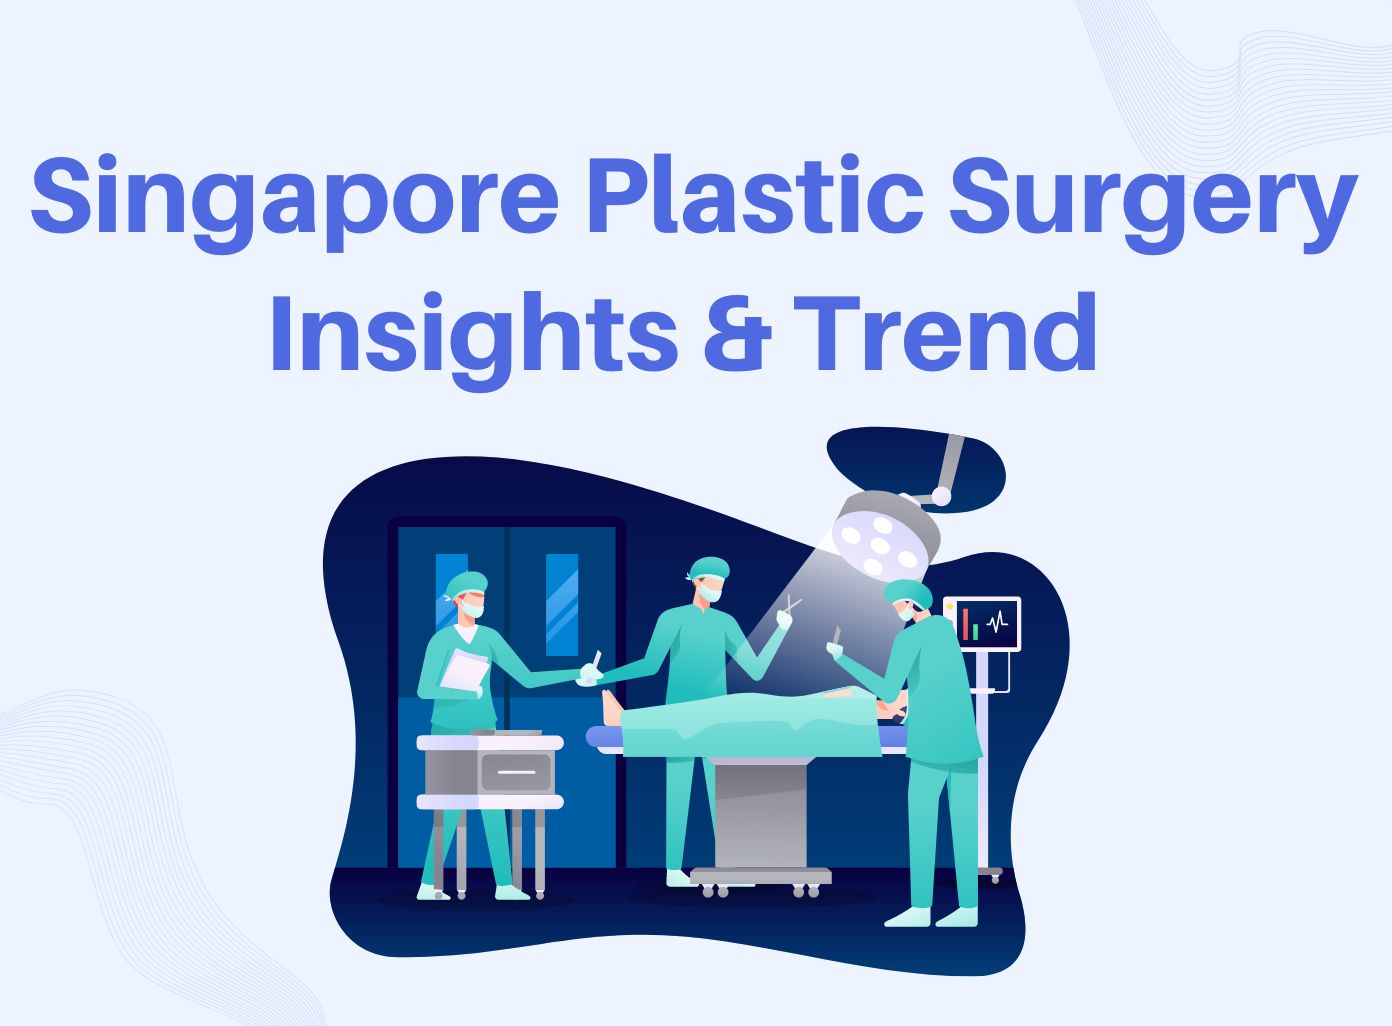 Singapore Plastic Surgery